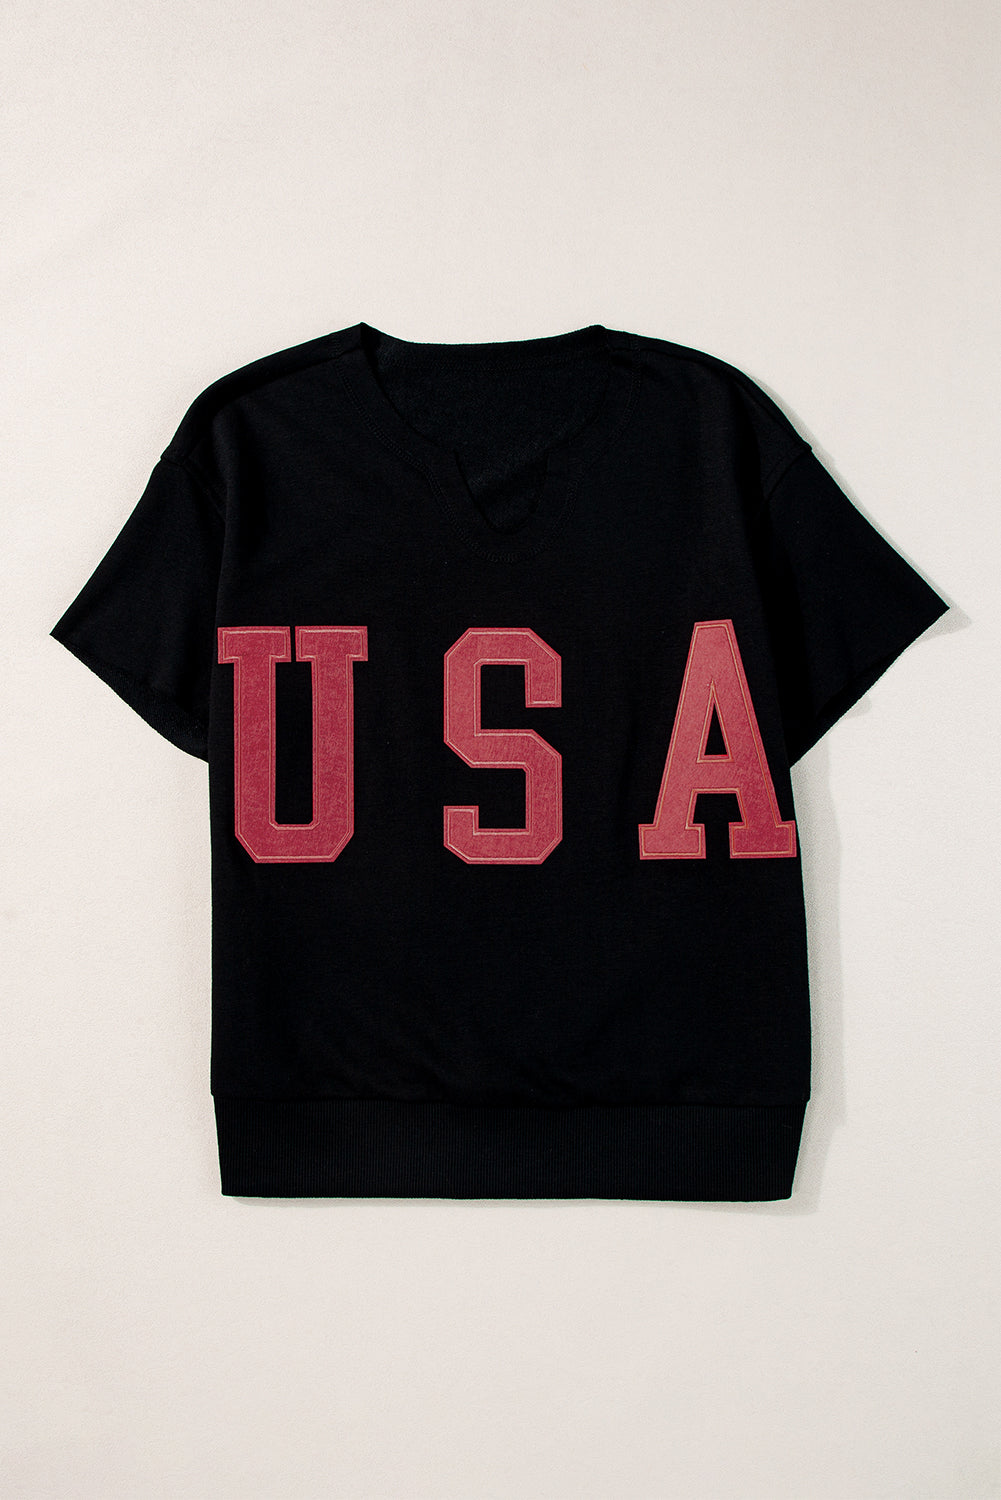 USA Notched Short Sleeve T-Shirt - Shop All Around Divas